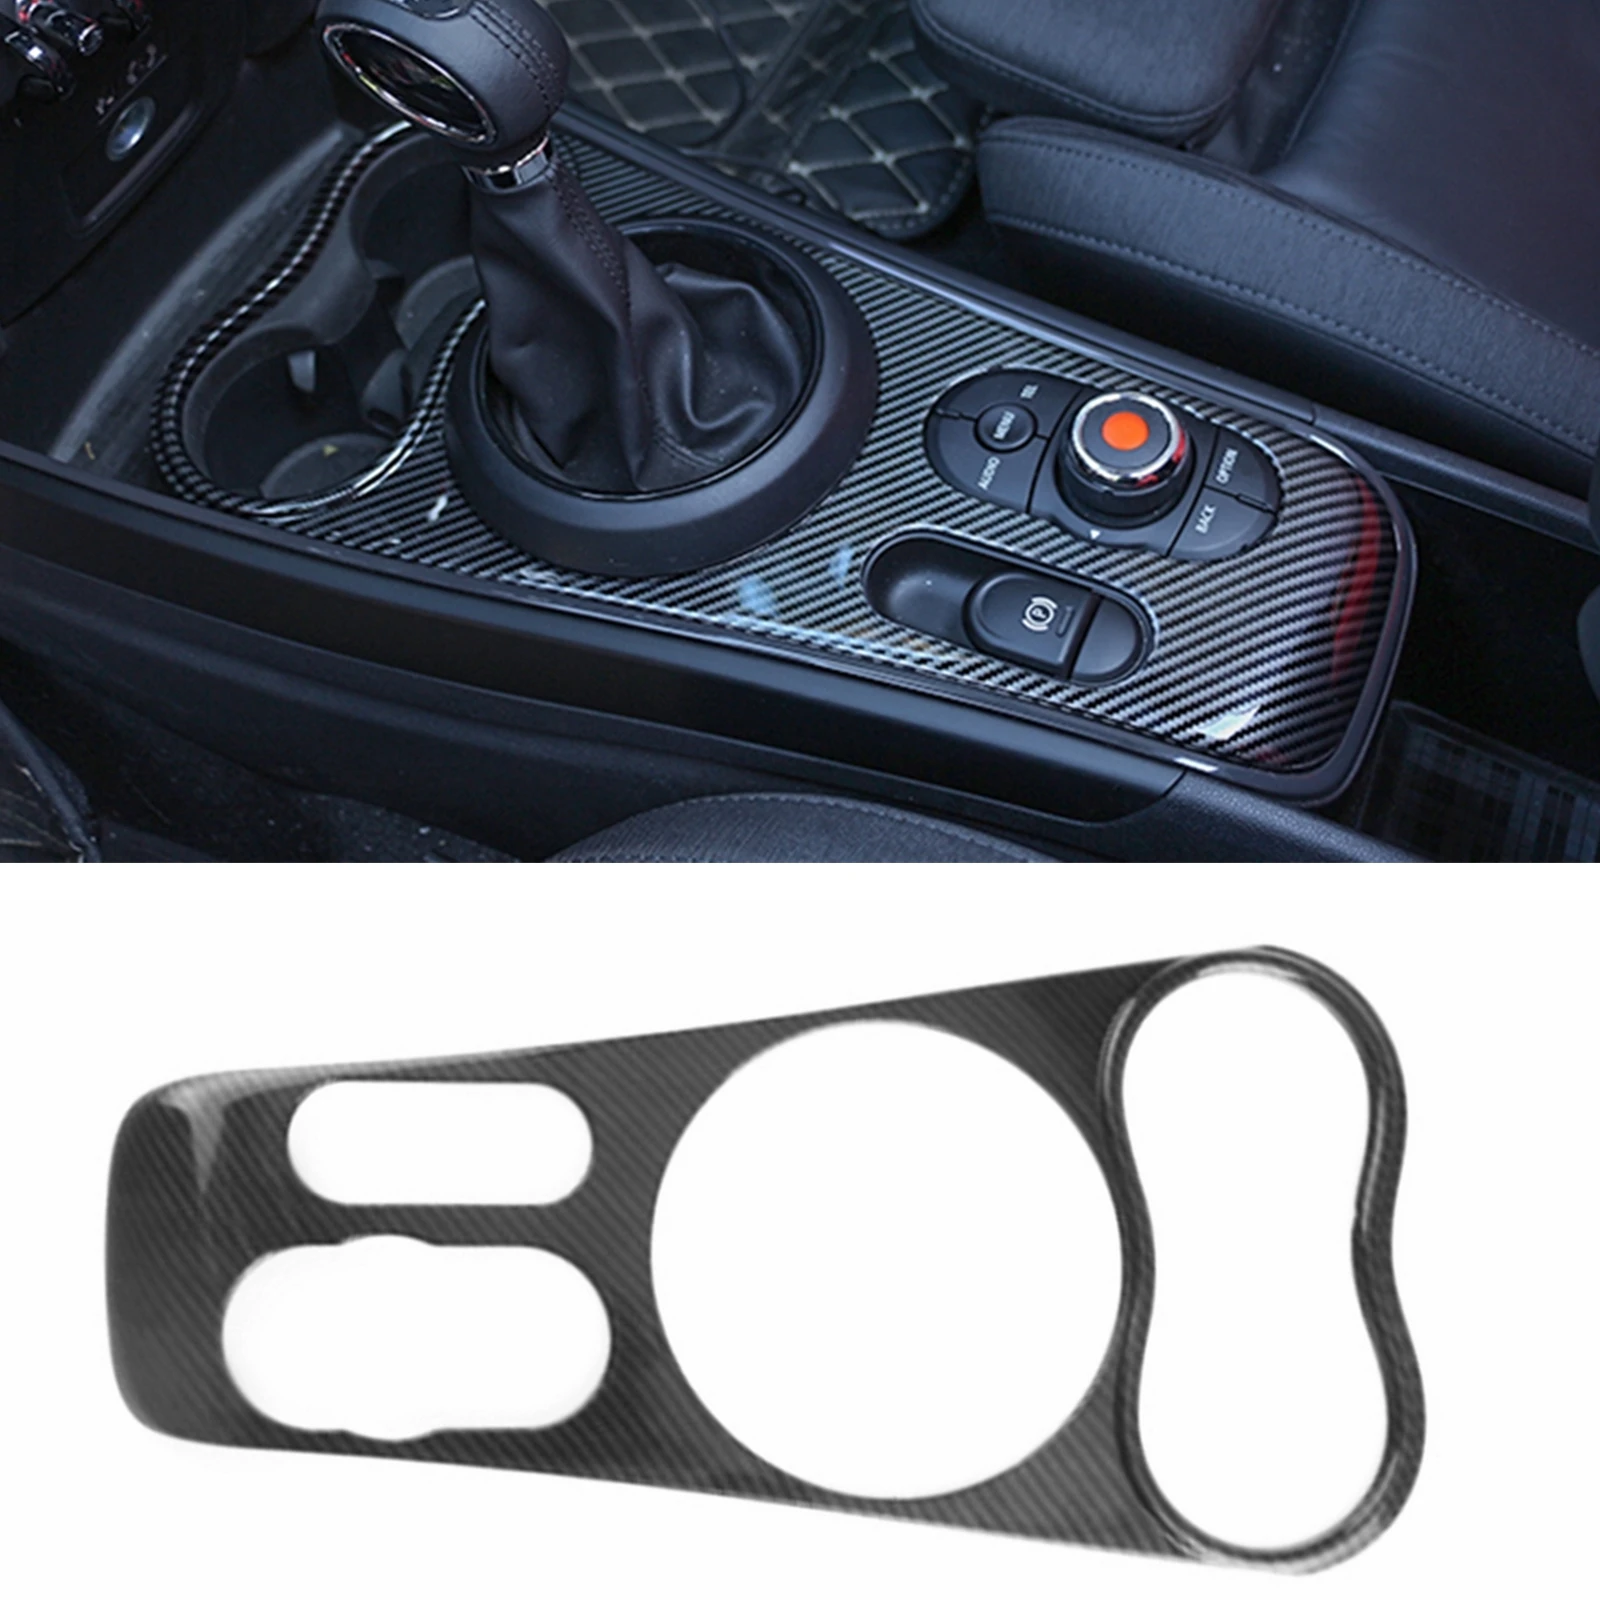 

1PCS Carbon Fiber Look Car Center Console Gear Shift Panel Frame Cover Sticker Trim For MINI Cooper Countryman F60 2017-2023 LHD